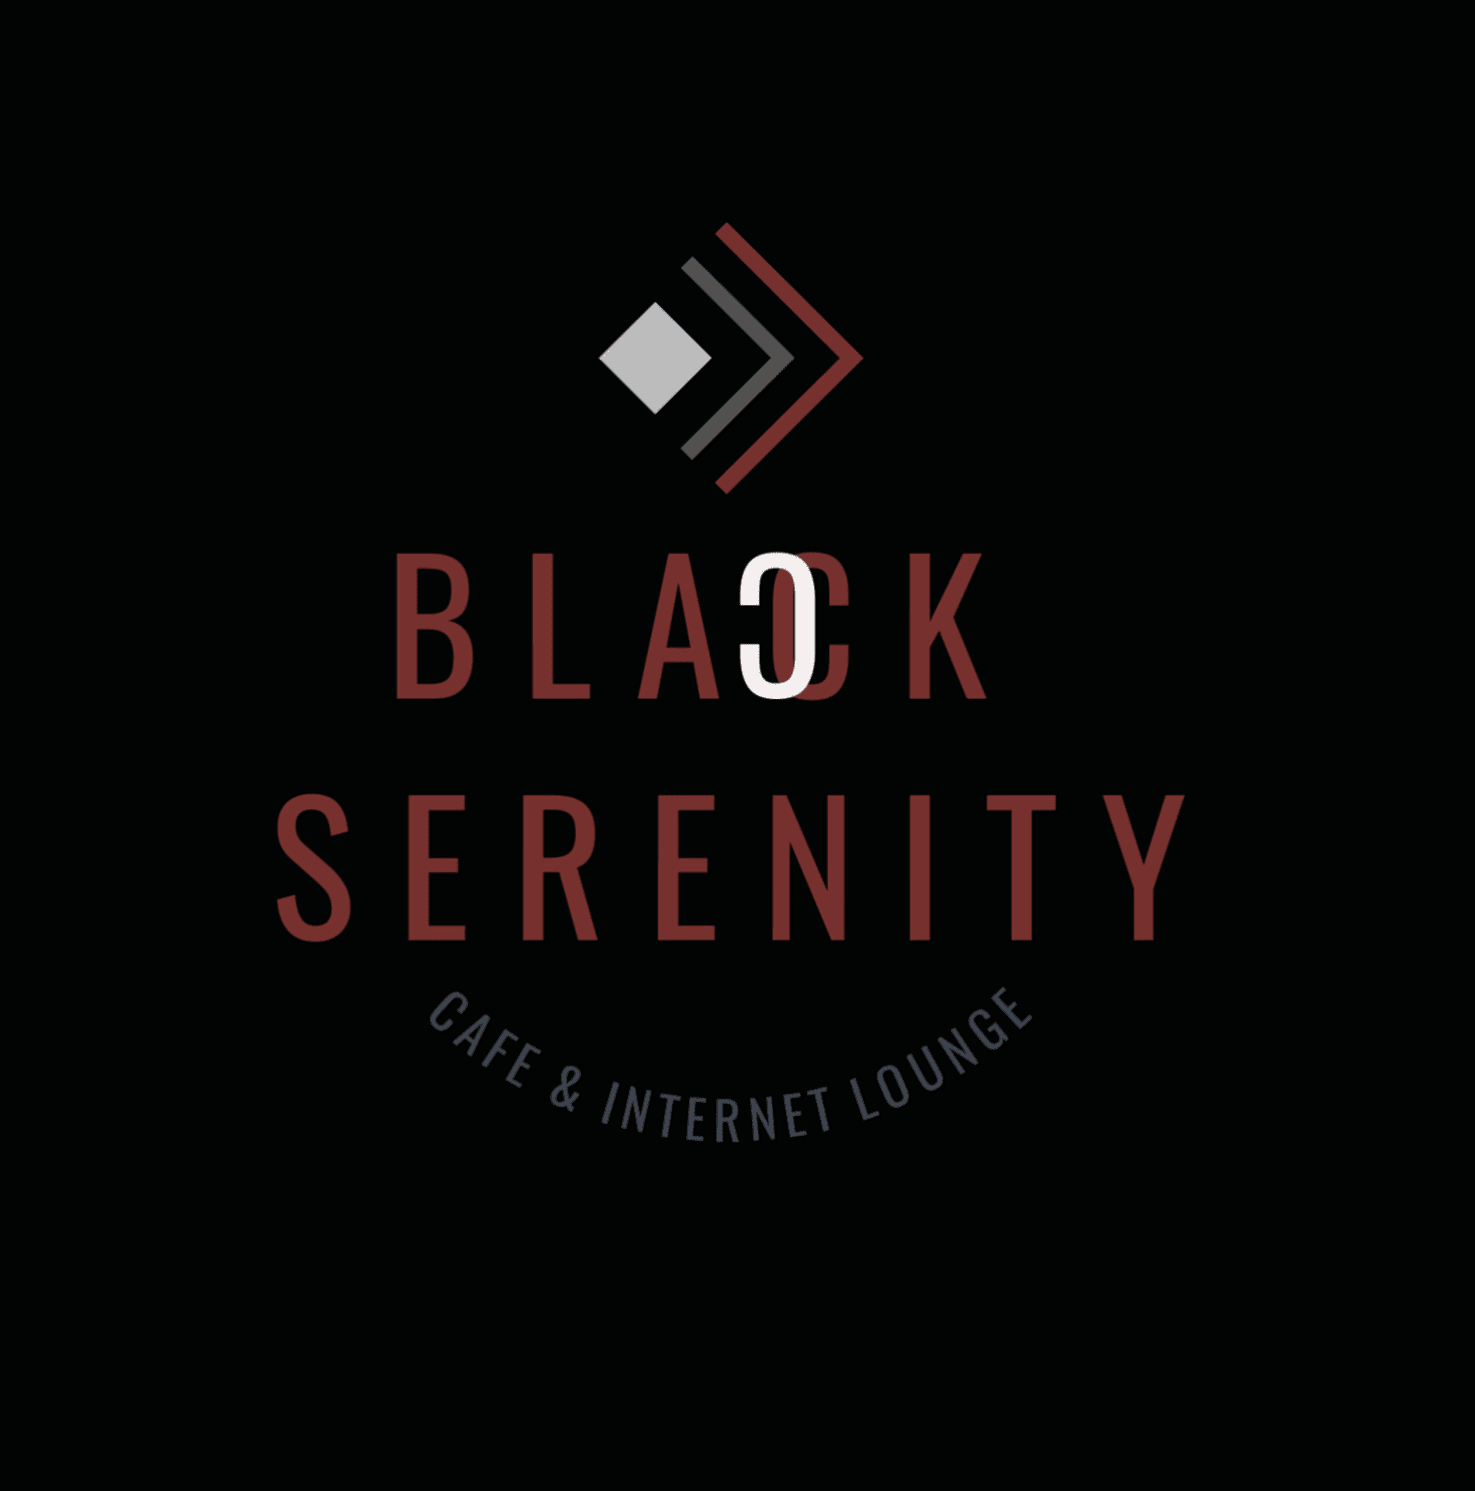 Black Serenity Cafe